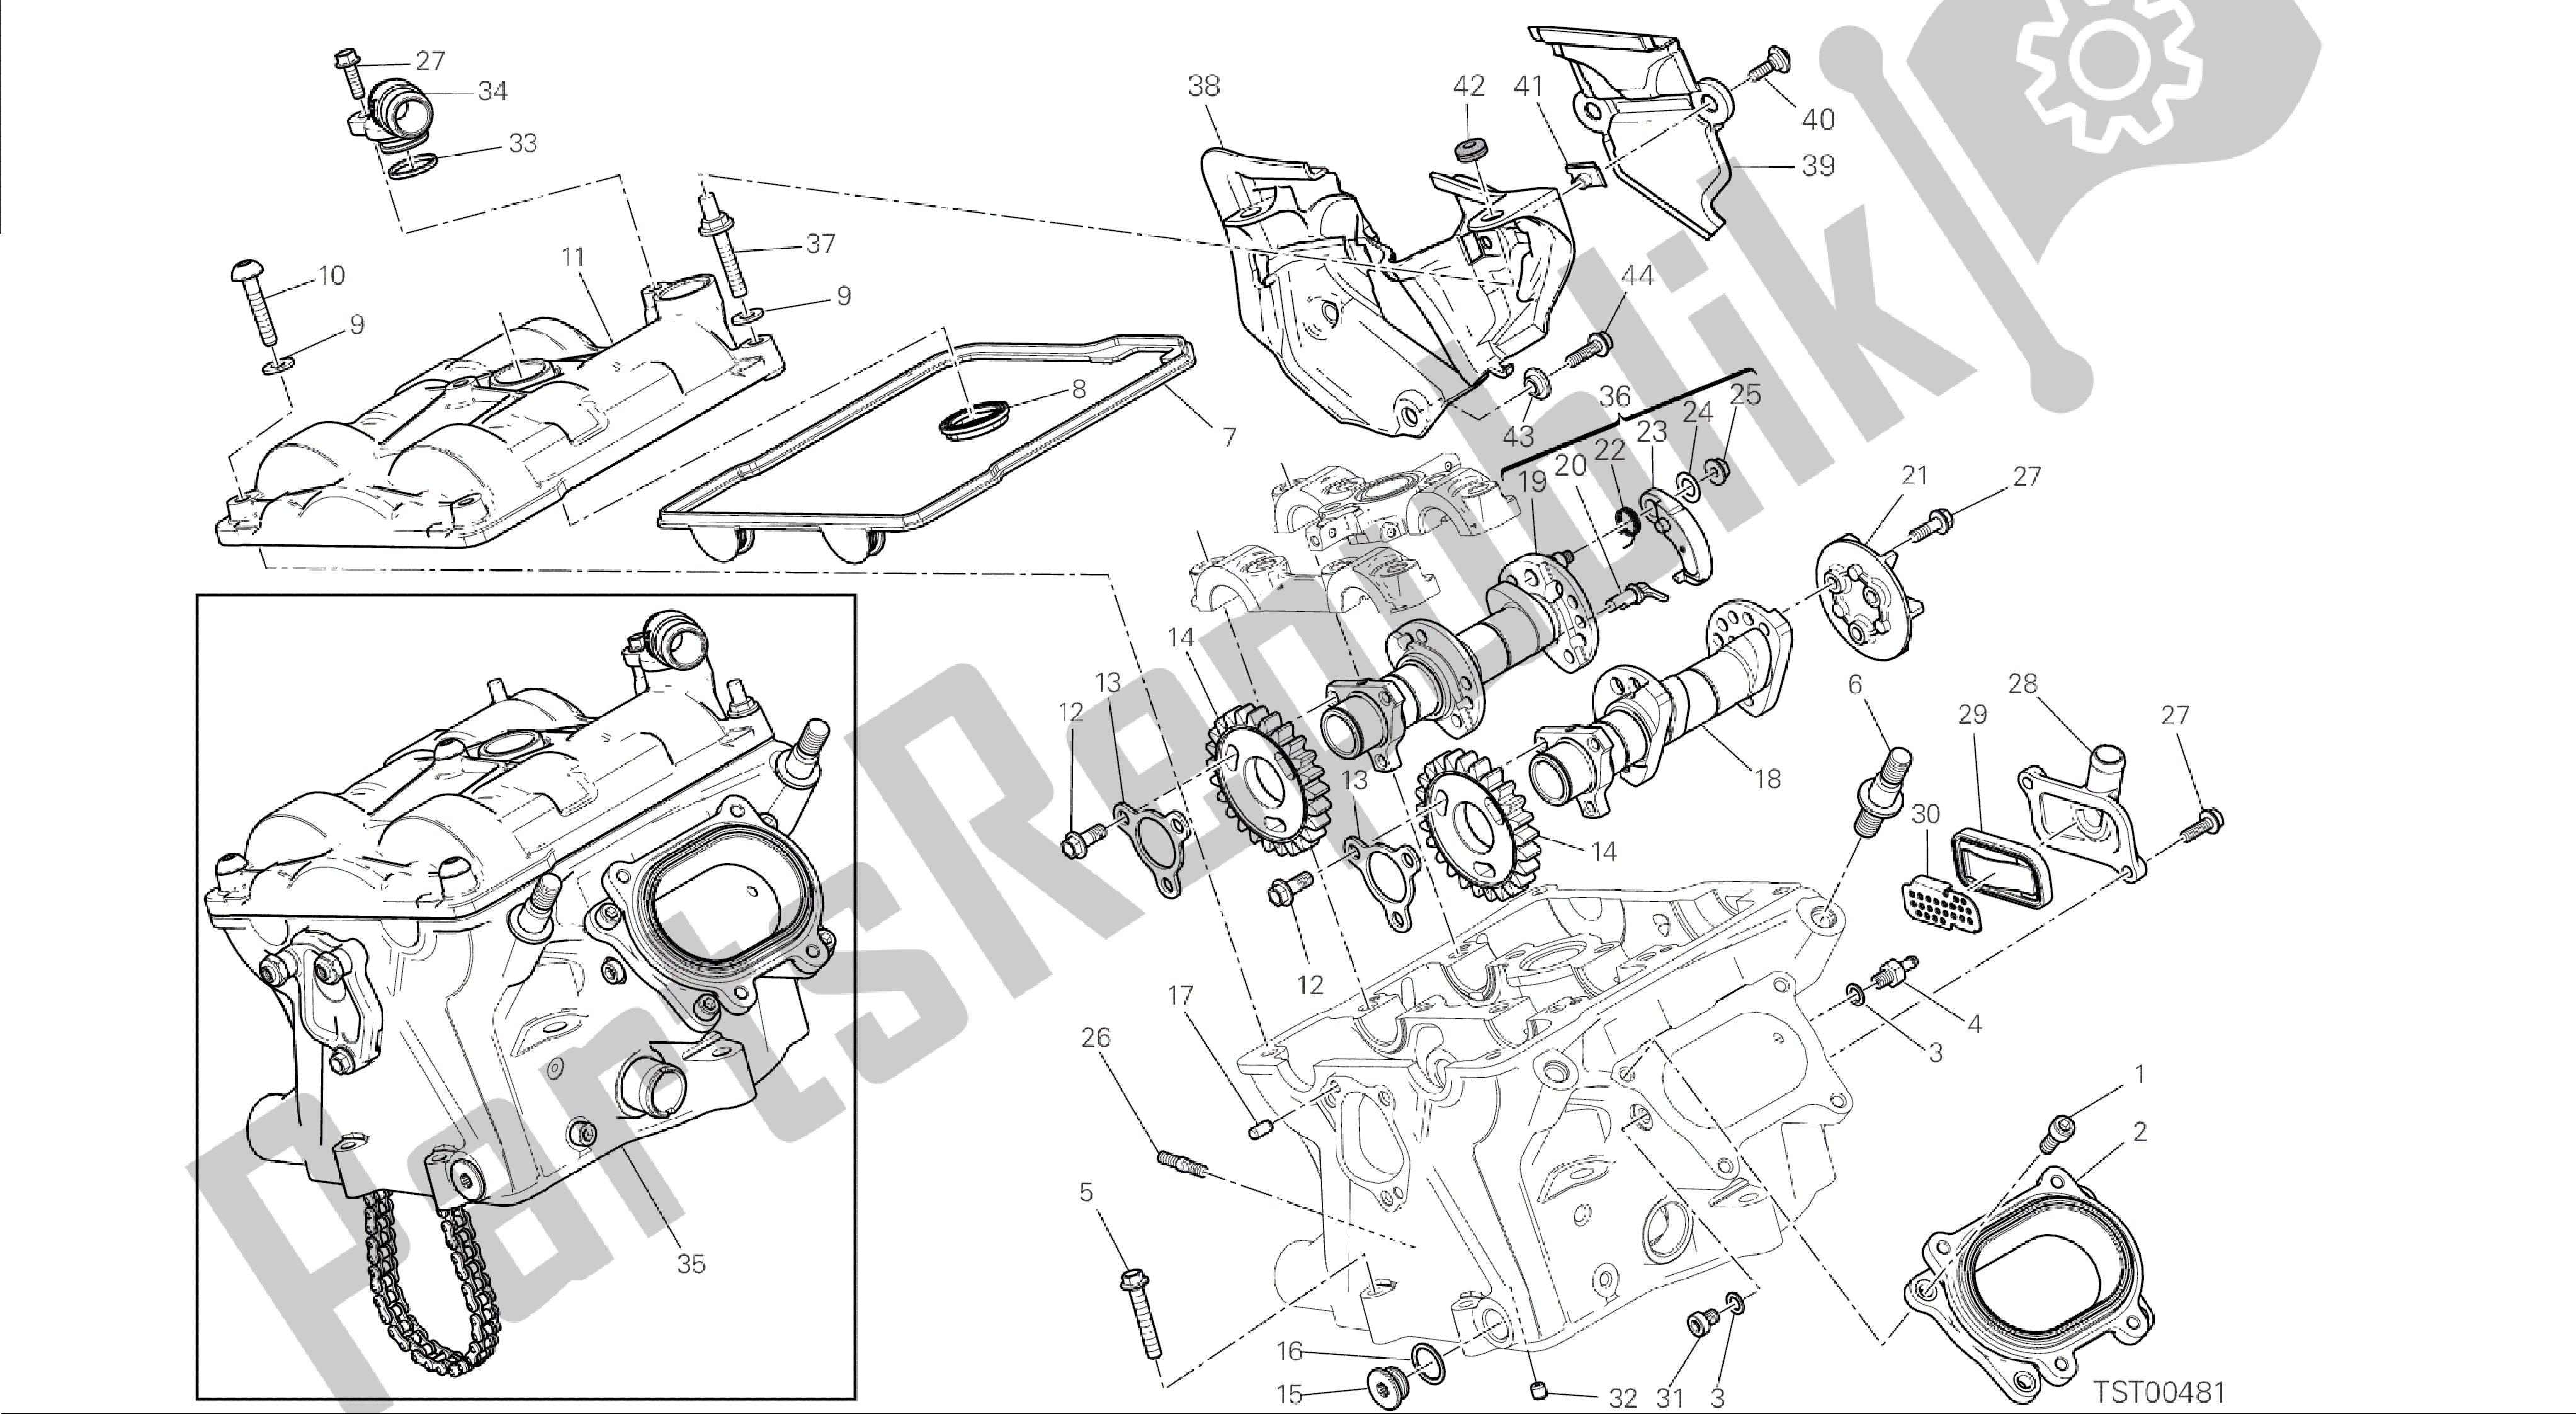 Alle onderdelen voor de Tekening 13a - Verticale Cilinderkop - Timing [mod: 1199abs; Xst: Aus, Bra, Eur, Fra, Jap] Groepsmotor van de Ducati Panigale ABS 1199 2014